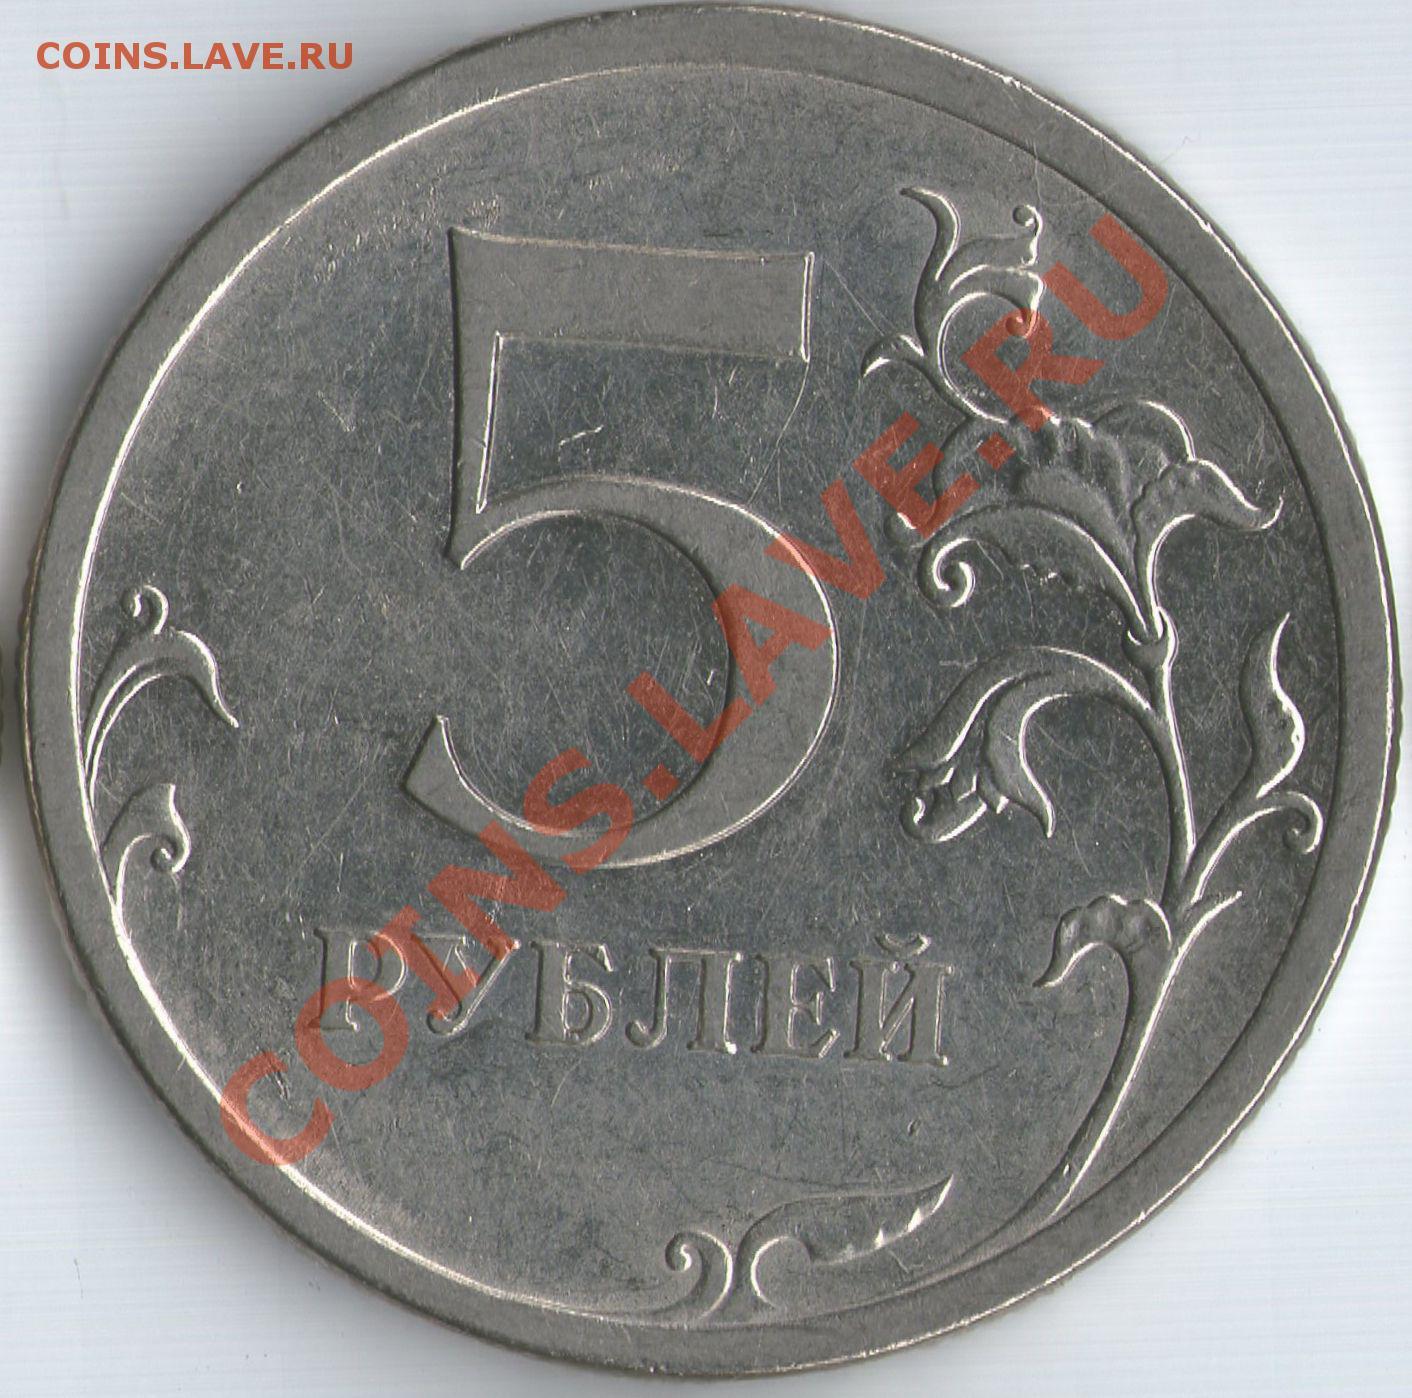 Рубль 5 32. 5 Рублей штемпель г 2009. Пять рублей 2009 г.штемпель 5.24. Шт. 3.24 1 Рубль 2009 года СПМД магнитный. 5 Рублей 2009 СПМД цена.